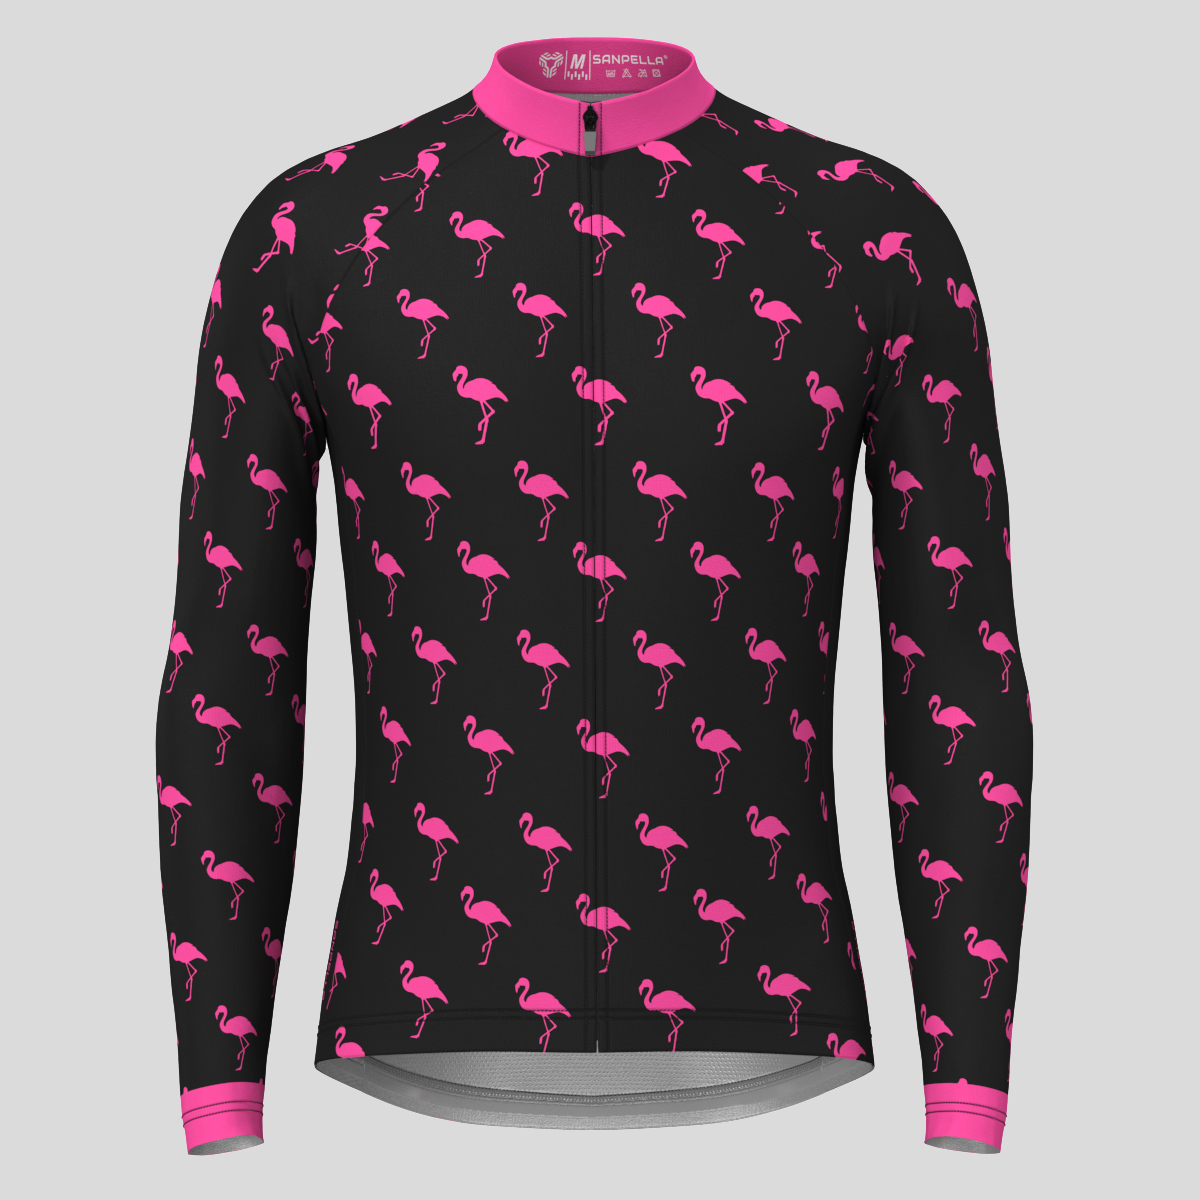 Flamingo Men's LS Cycling Jersey - Pink/Black